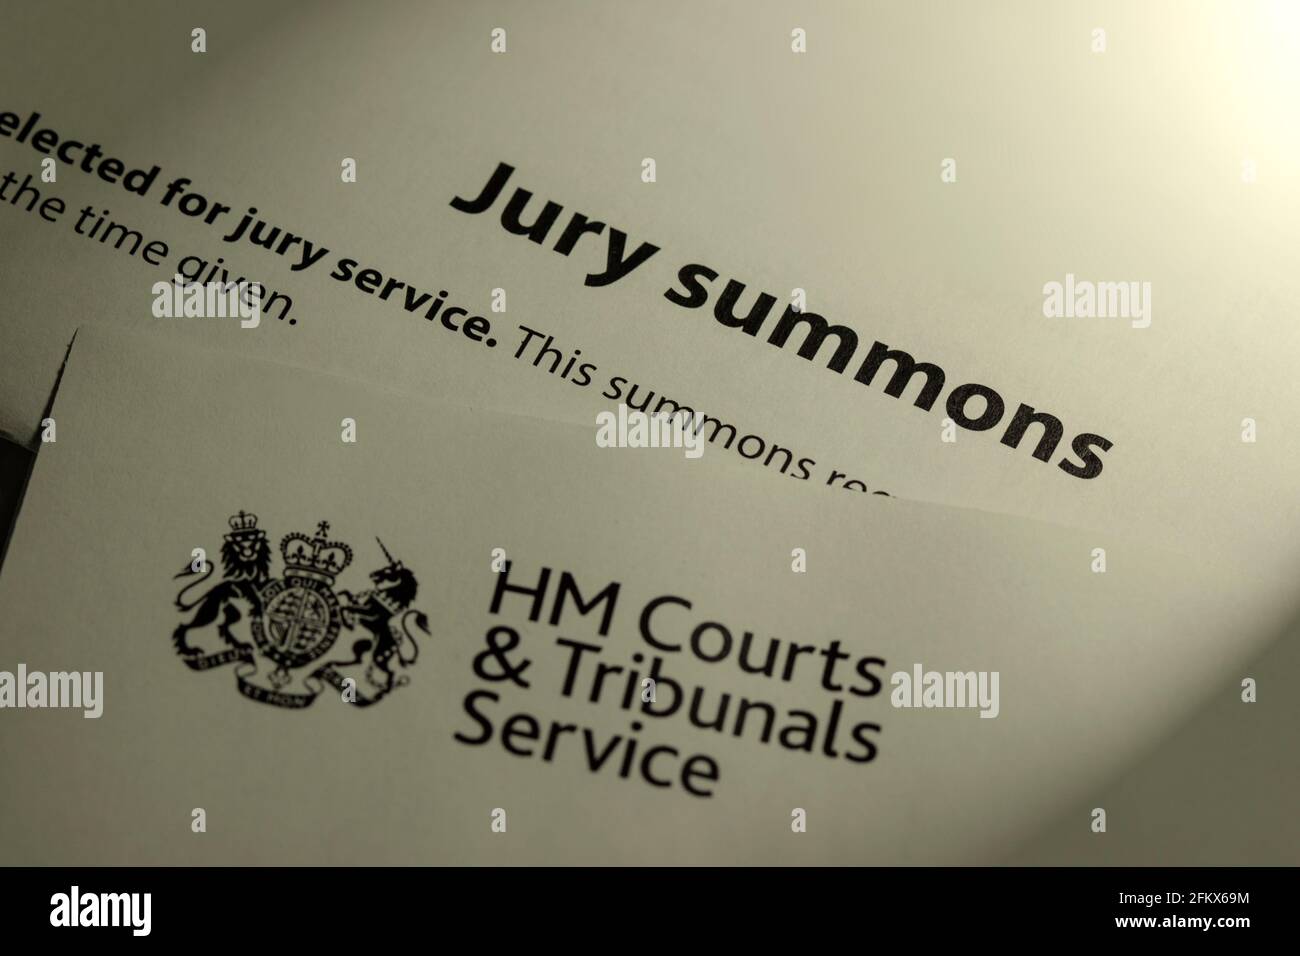 Summons for Jury Service Stock Photo